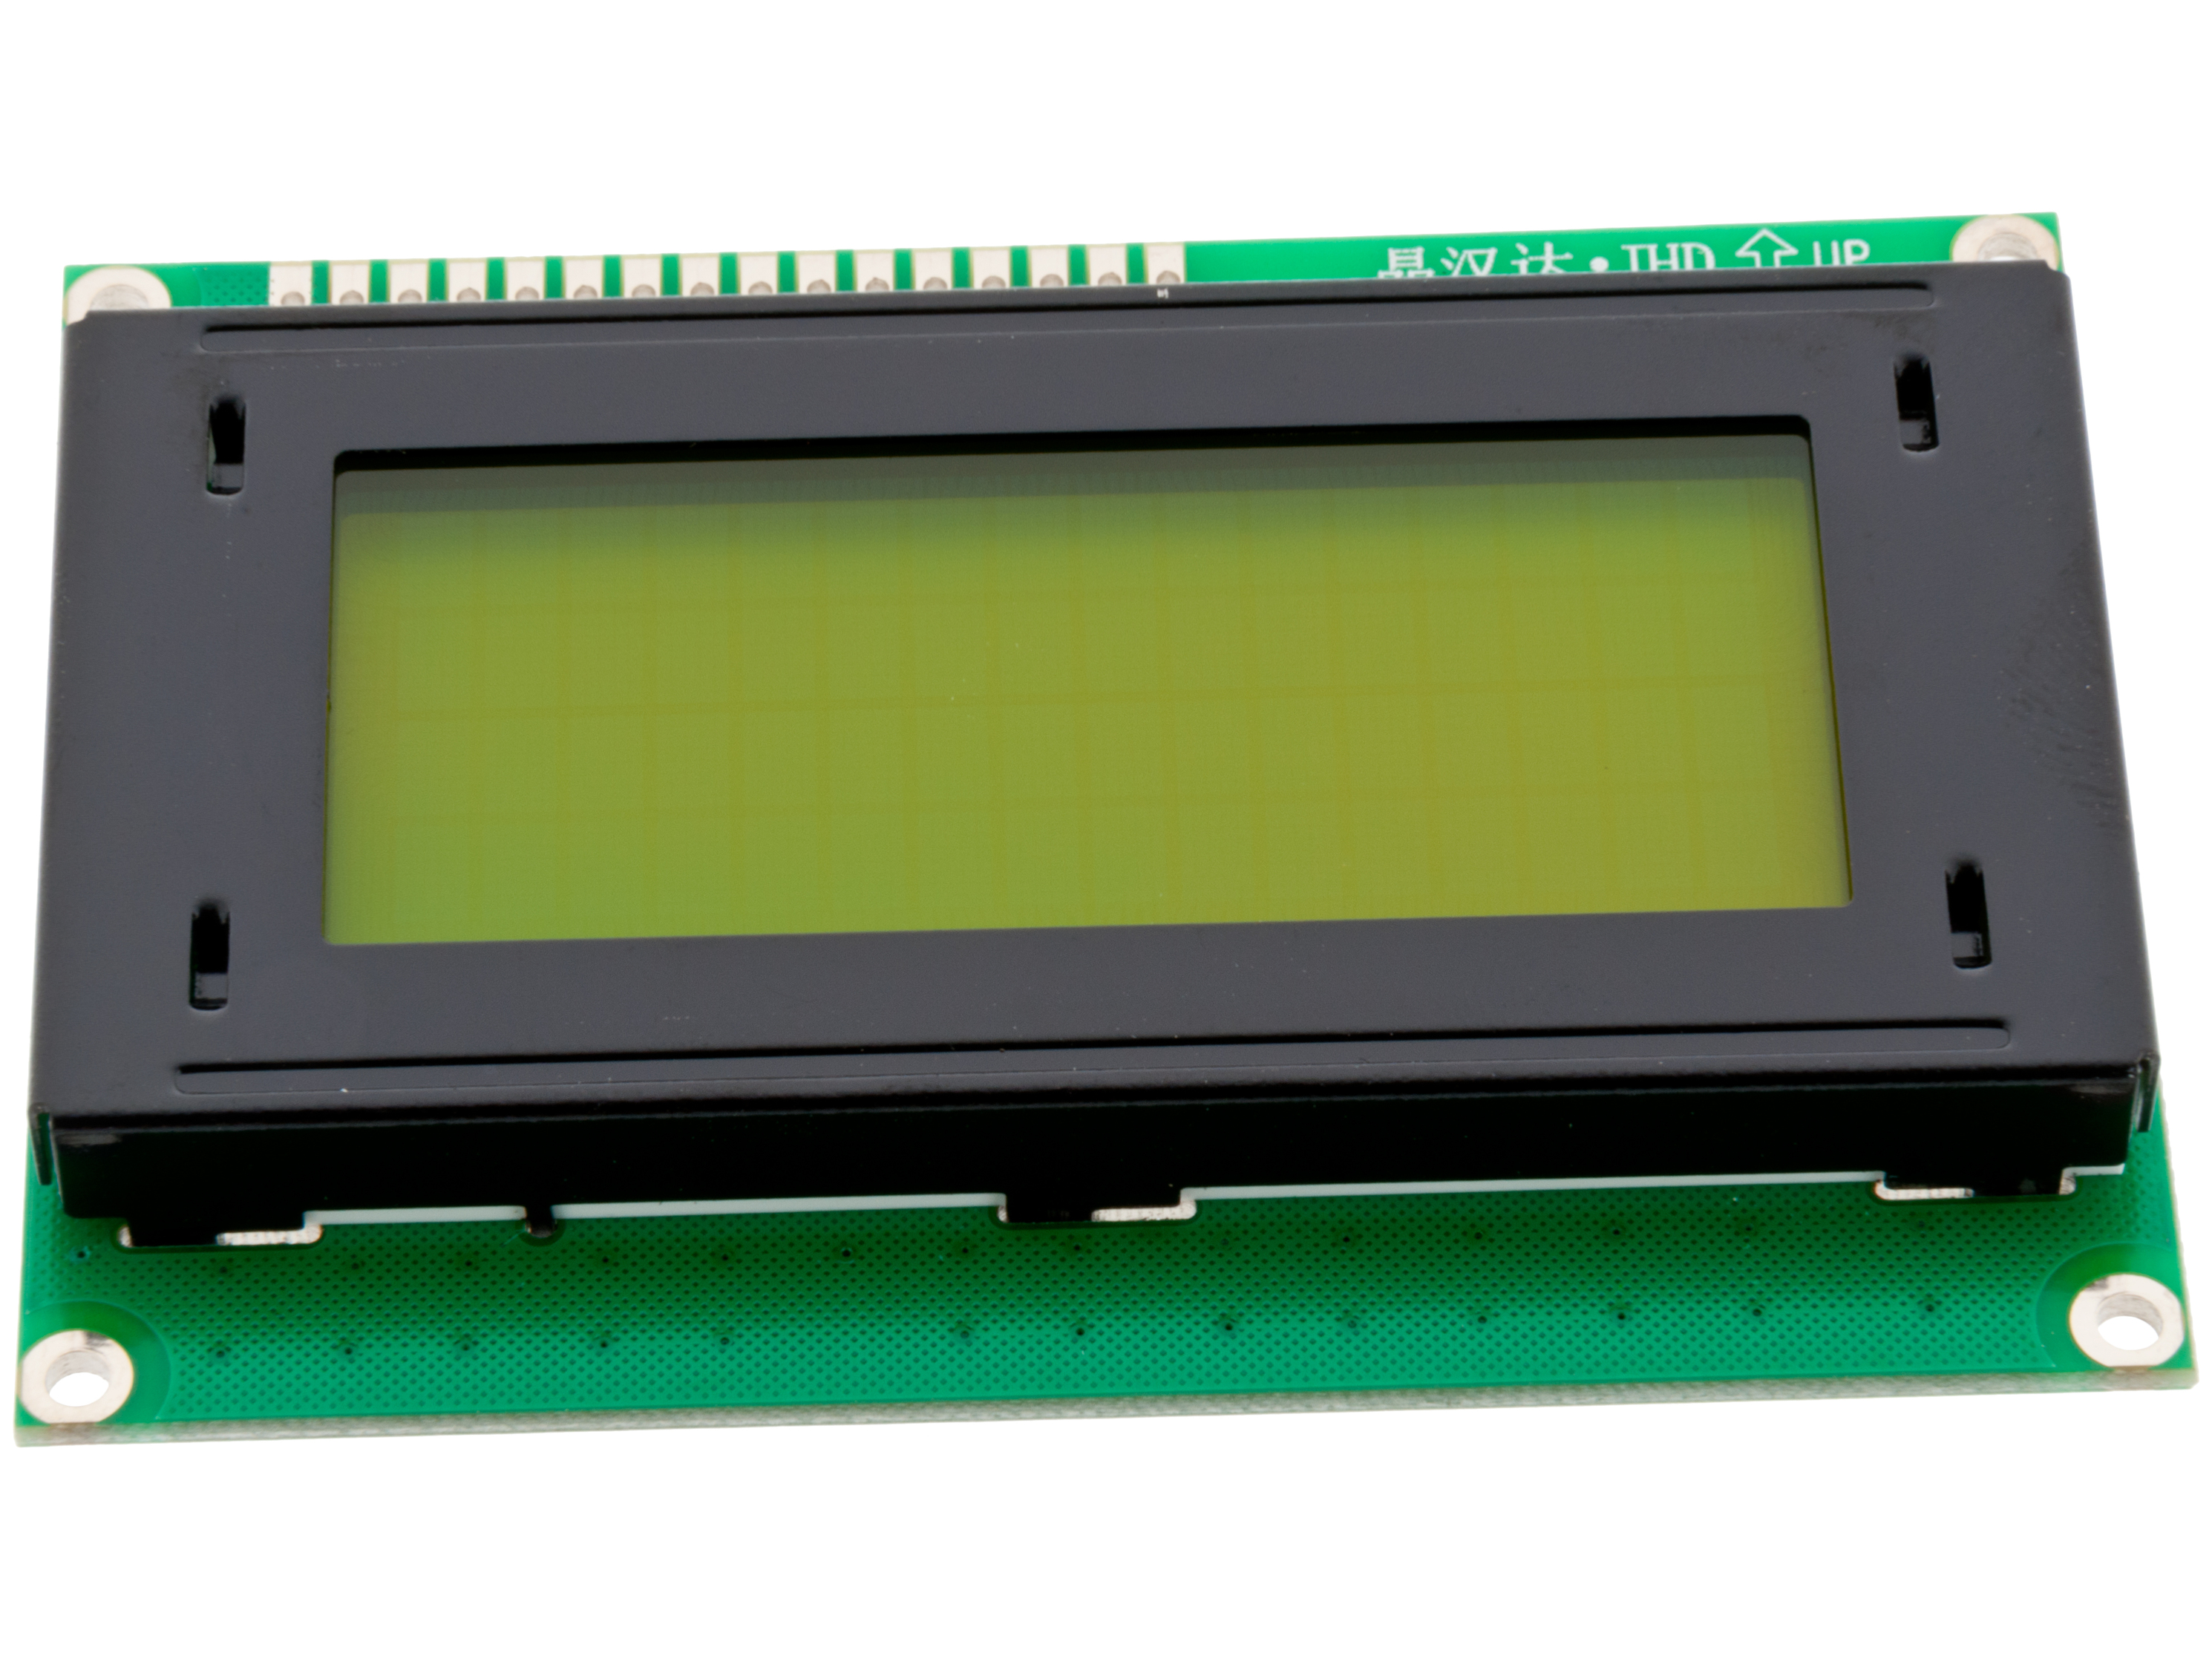 LCD 4x16-char JHD164A STN yellow-green LED @ electrokit